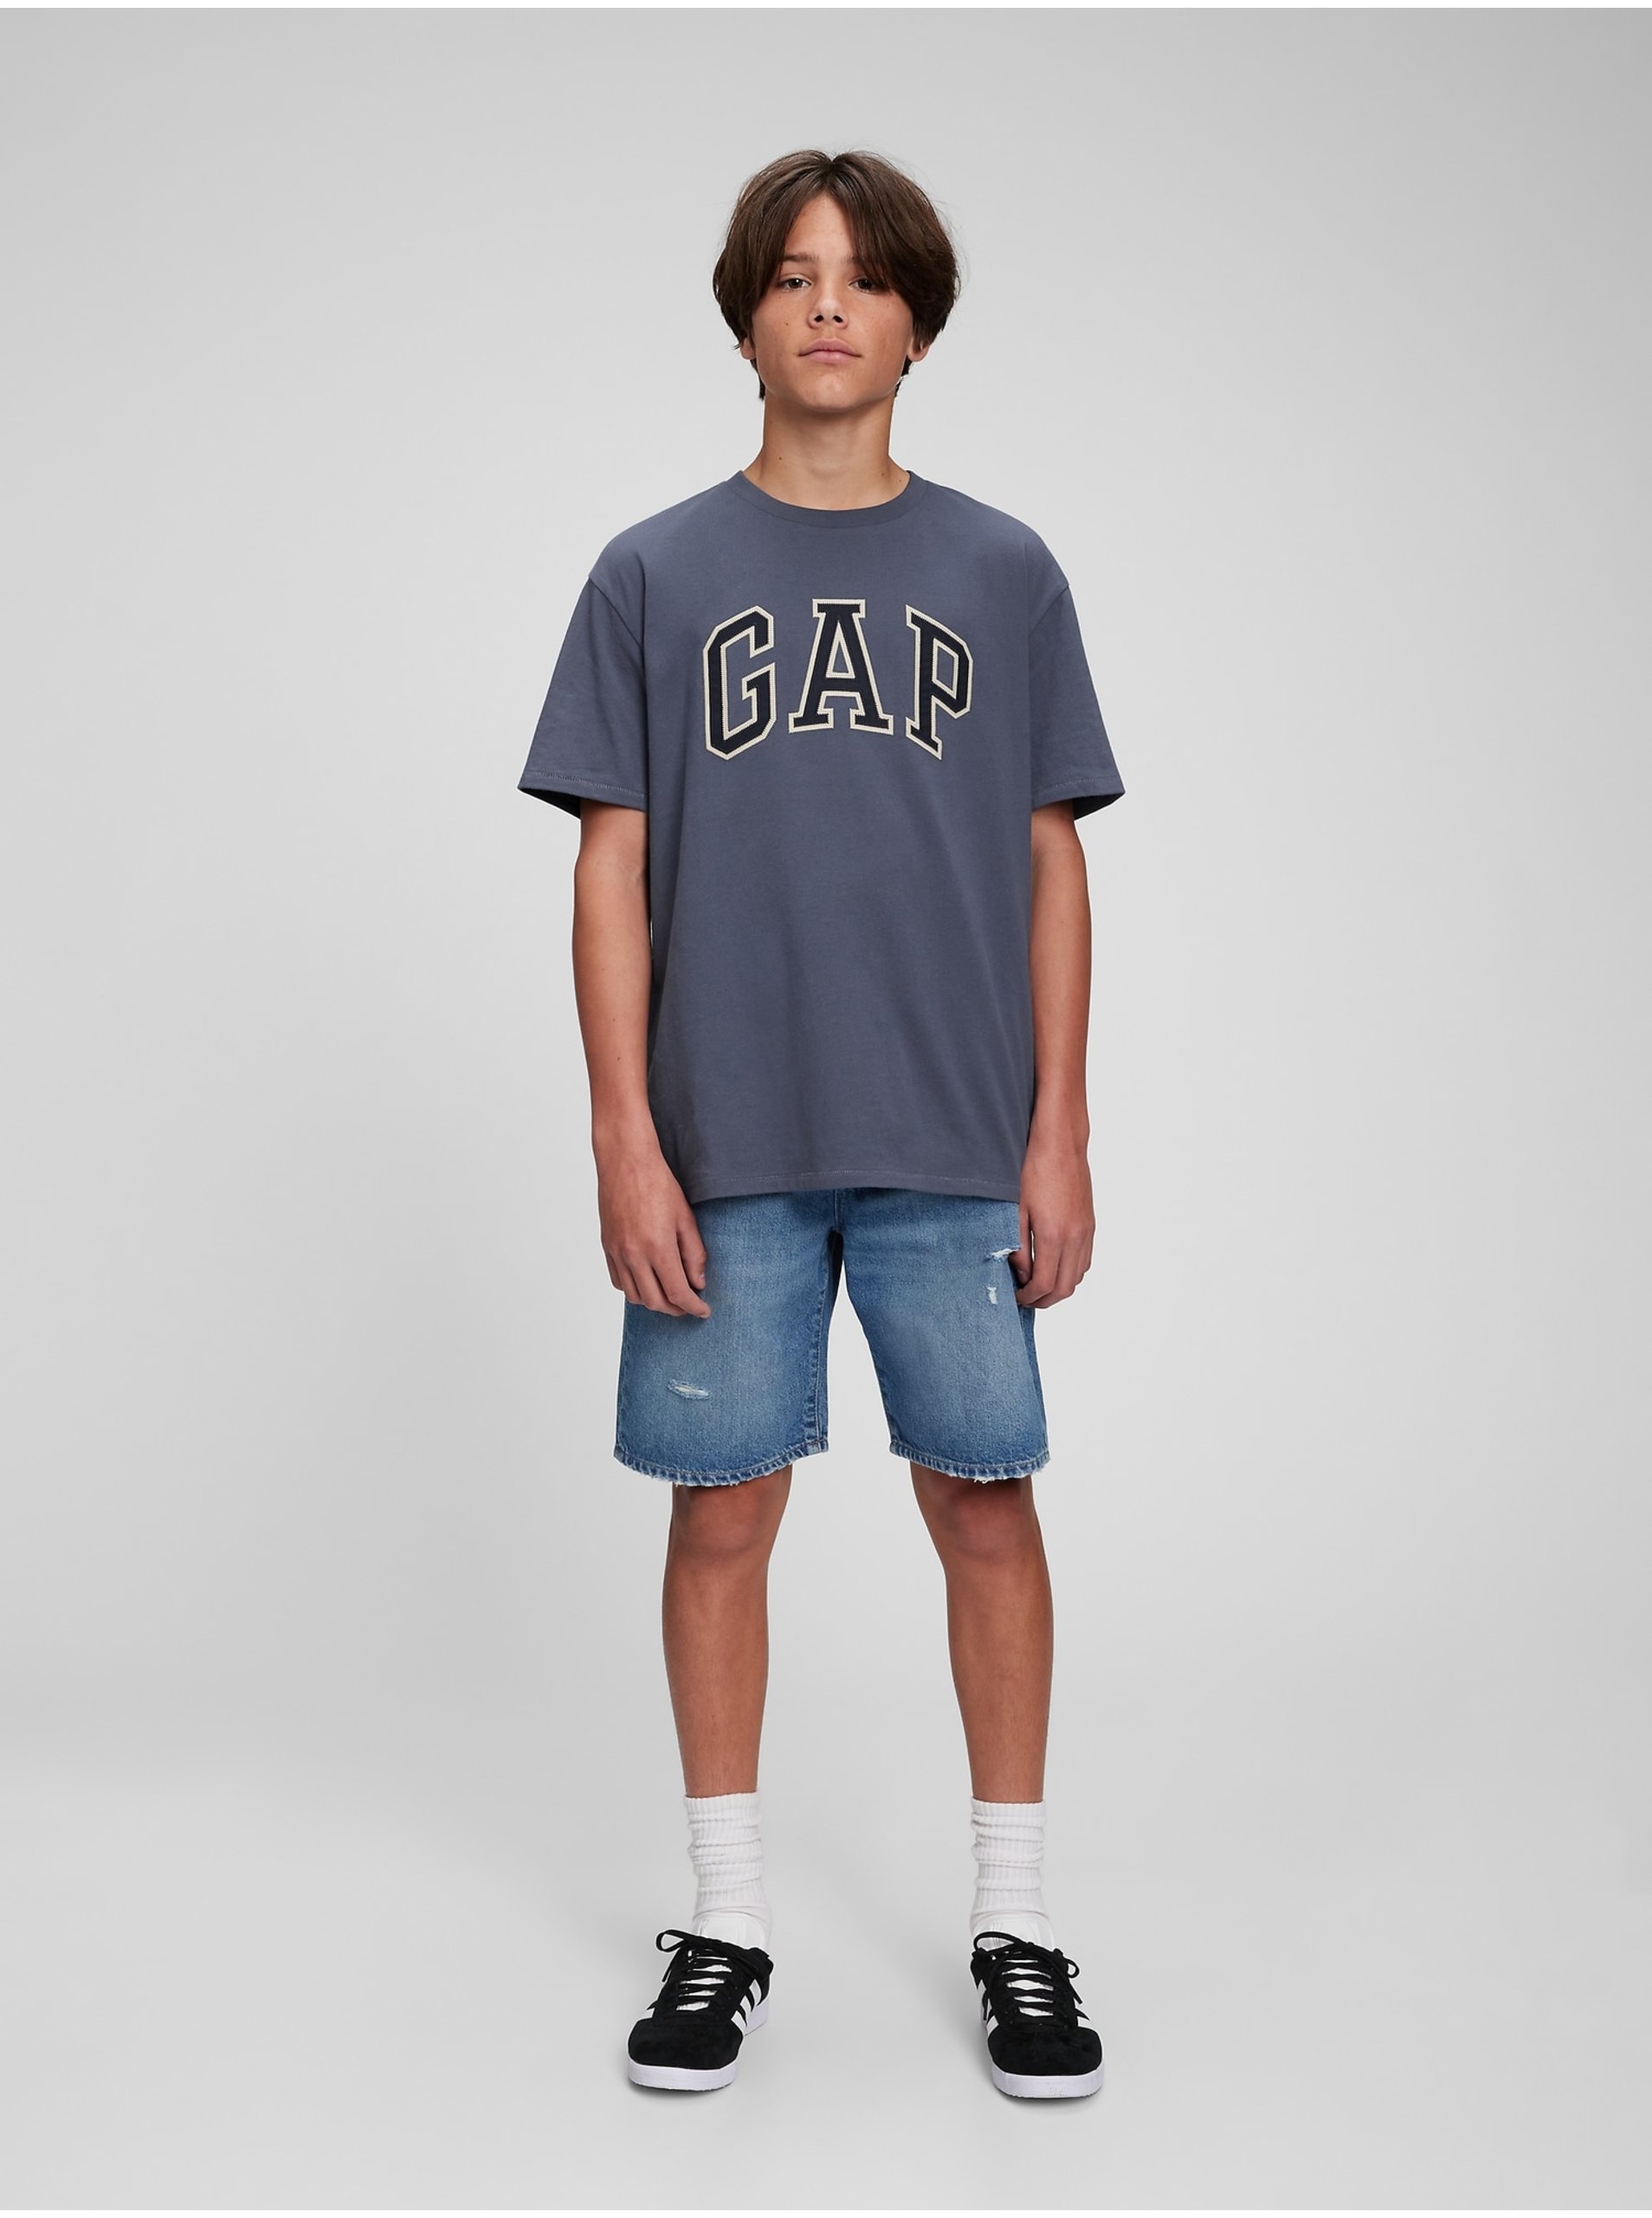 Lacno Modré chlapčenské tričko Teen organic logo GAP GAP